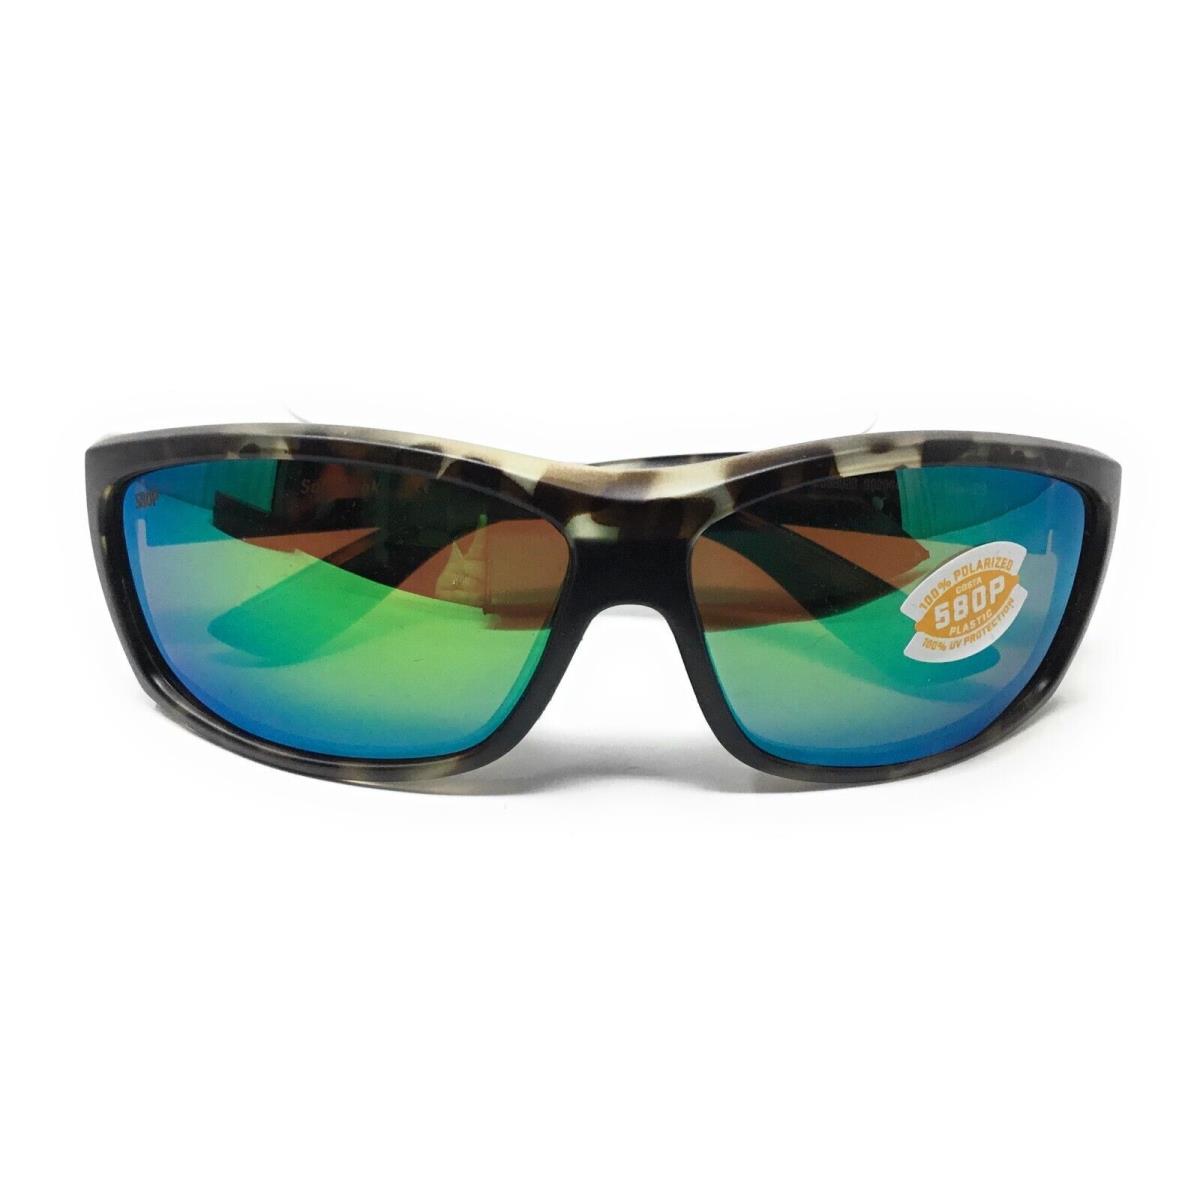 Costa Del Mar Saltbreak Mens Green Mirror Polarized Sunglasses 6S9020 902044 - Wetlands Frame, Green Mirror Lens